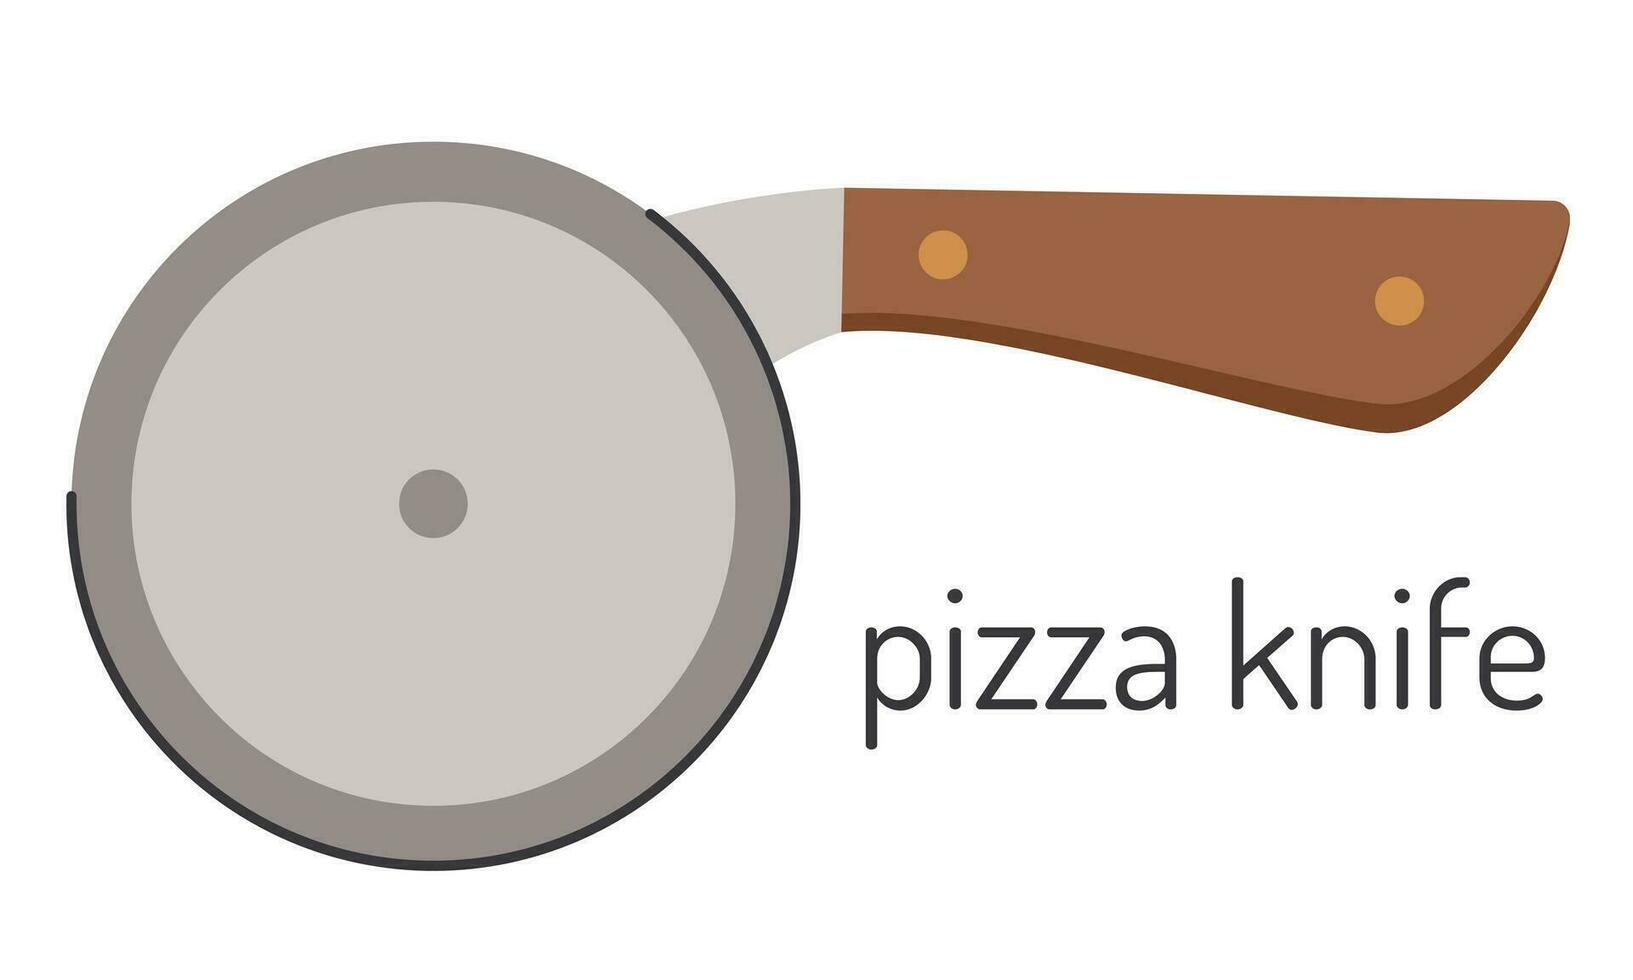 Vector illustration of kitchen accessories, pizza knife. Stock vector illustration